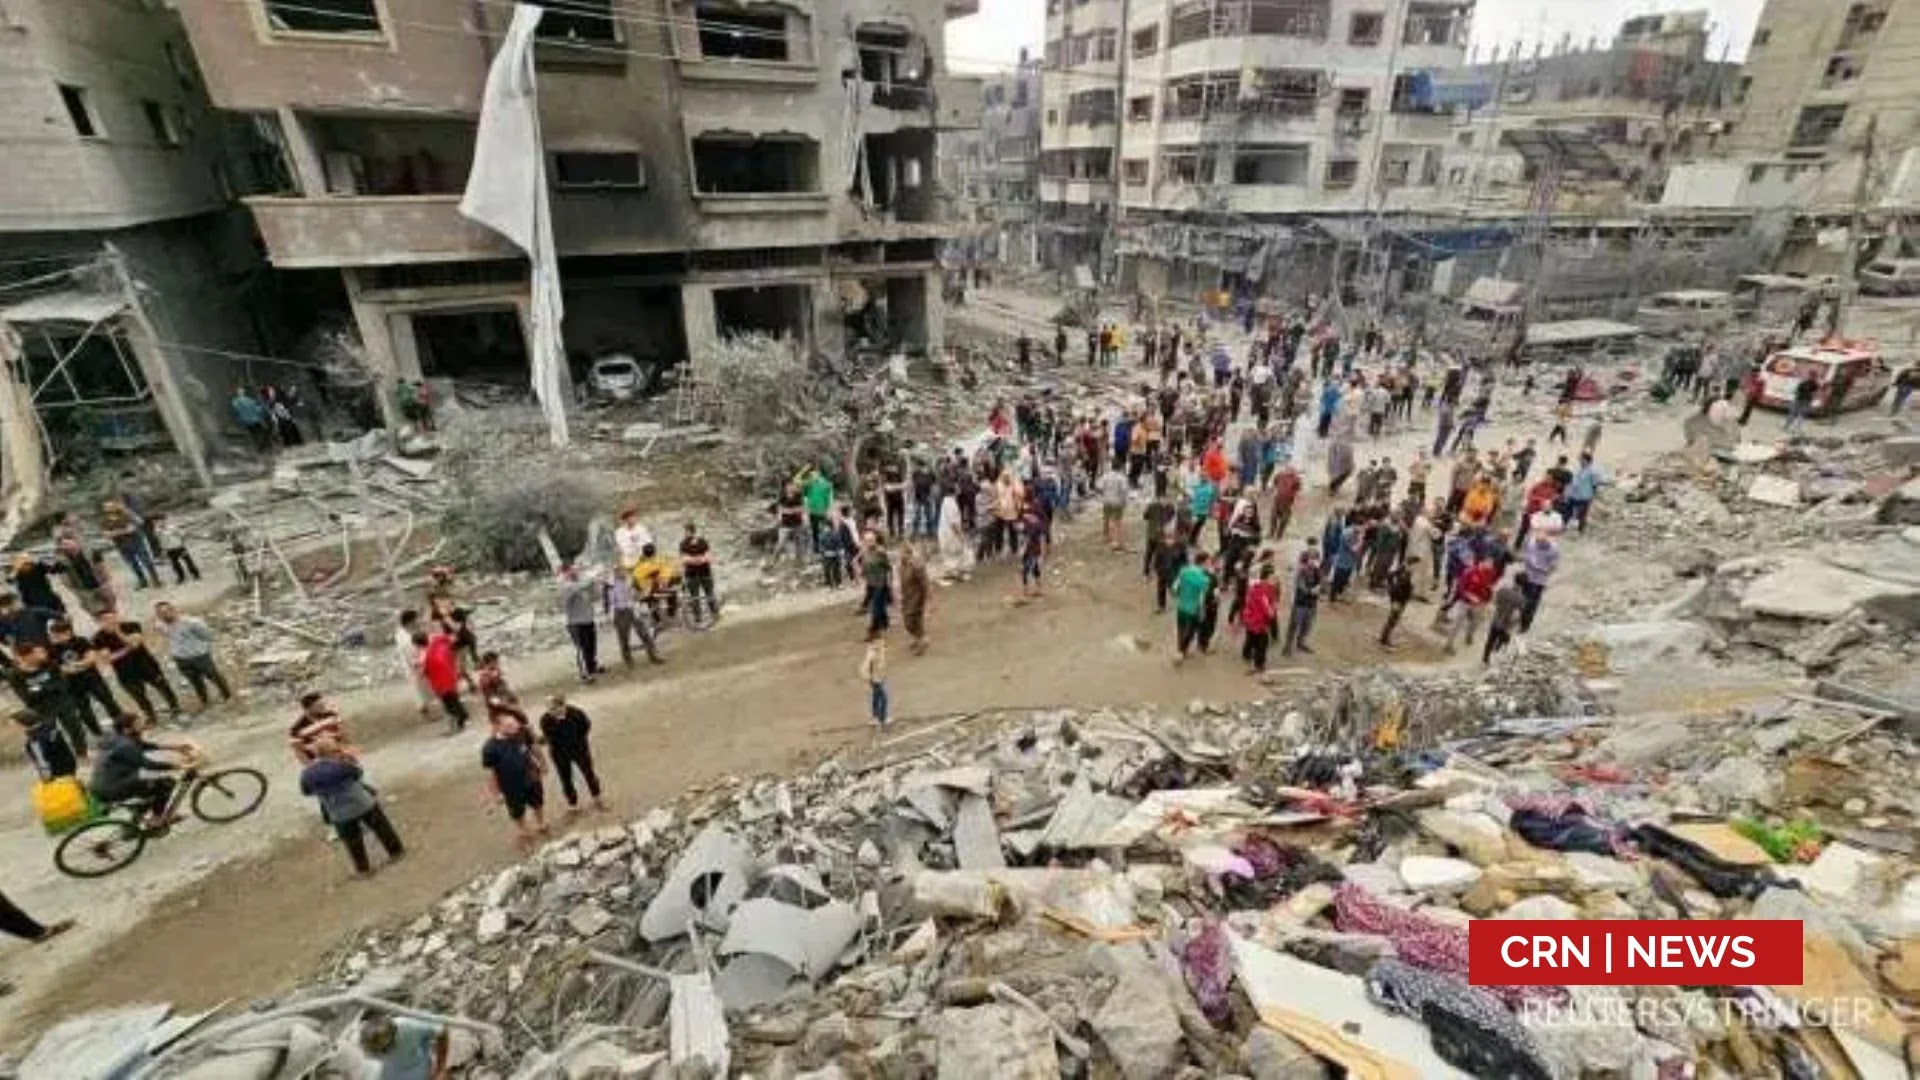 Gaza residents seek shelter as Israeli bombing intensifies